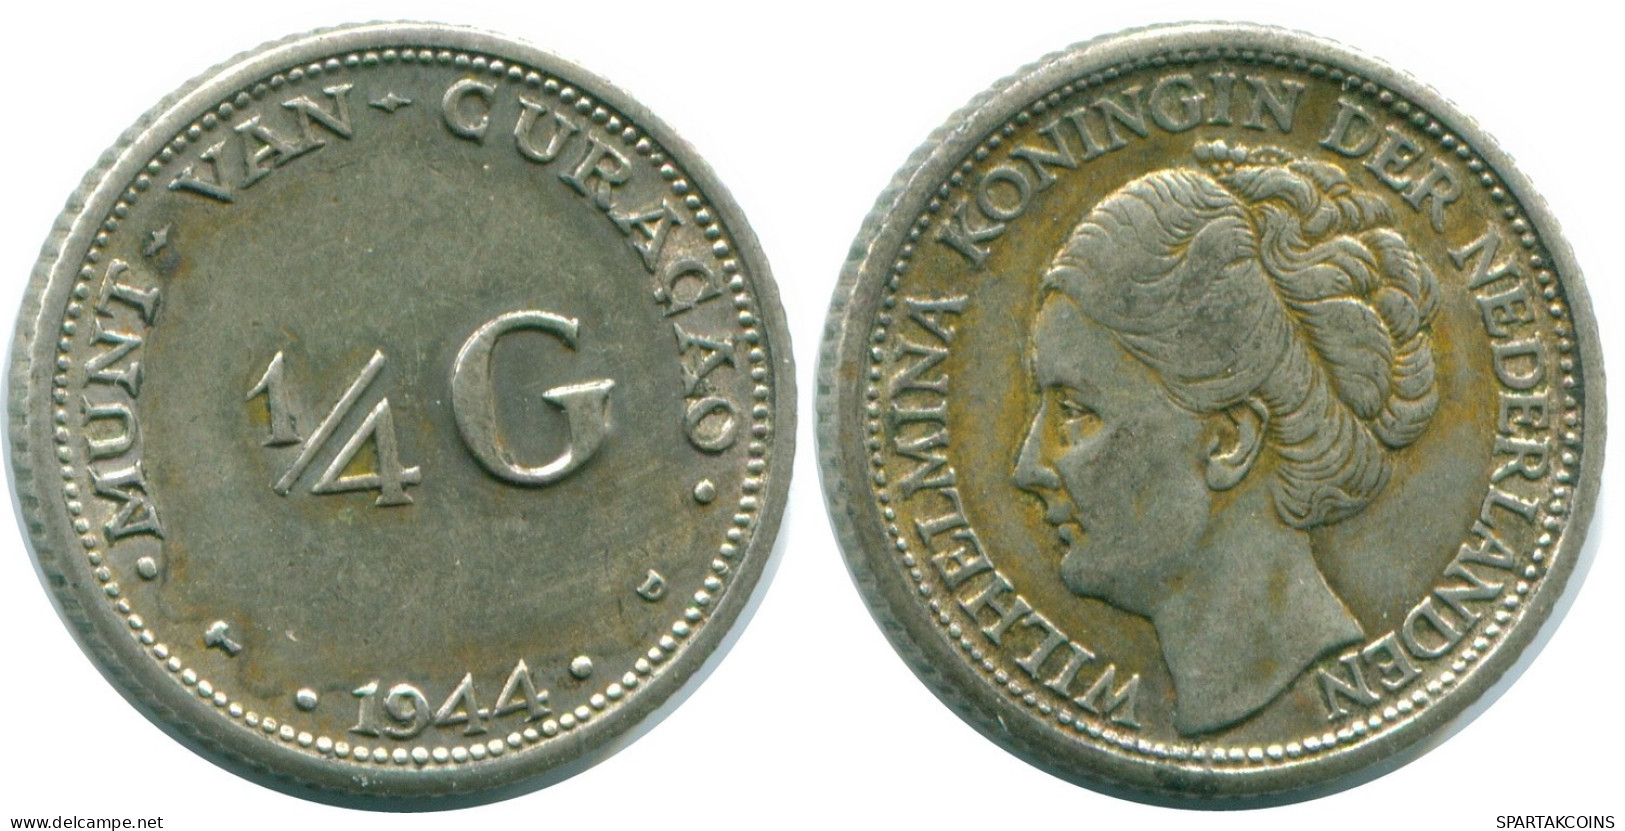 1/4 GULDEN 1944 CURACAO Netherlands SILVER Colonial Coin #NL10641.4.U.A - Curacao